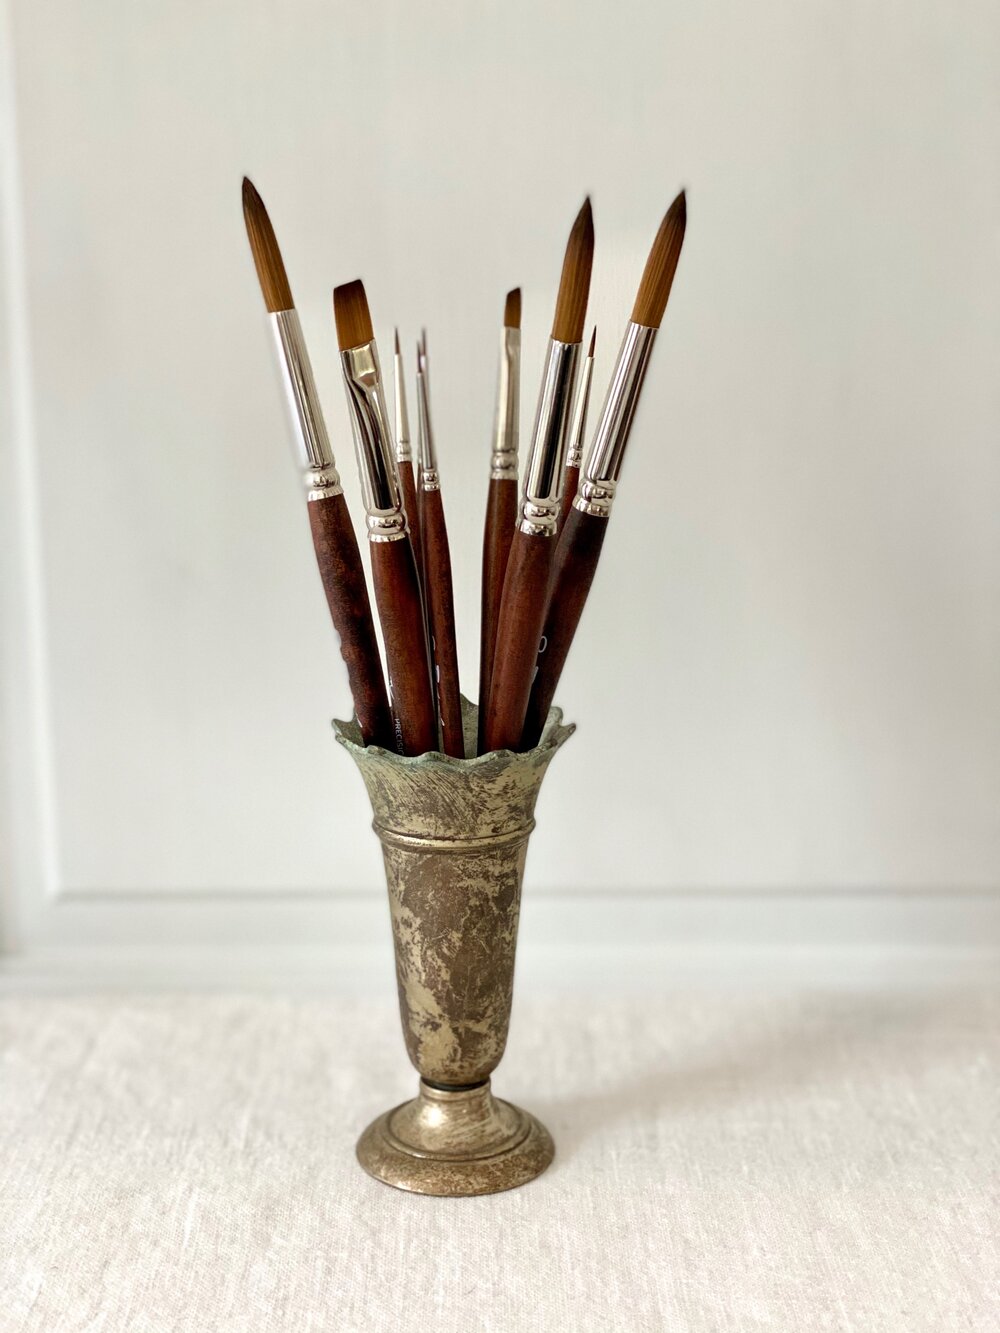 Raphaël Precision Paint Brushes — Good Gray